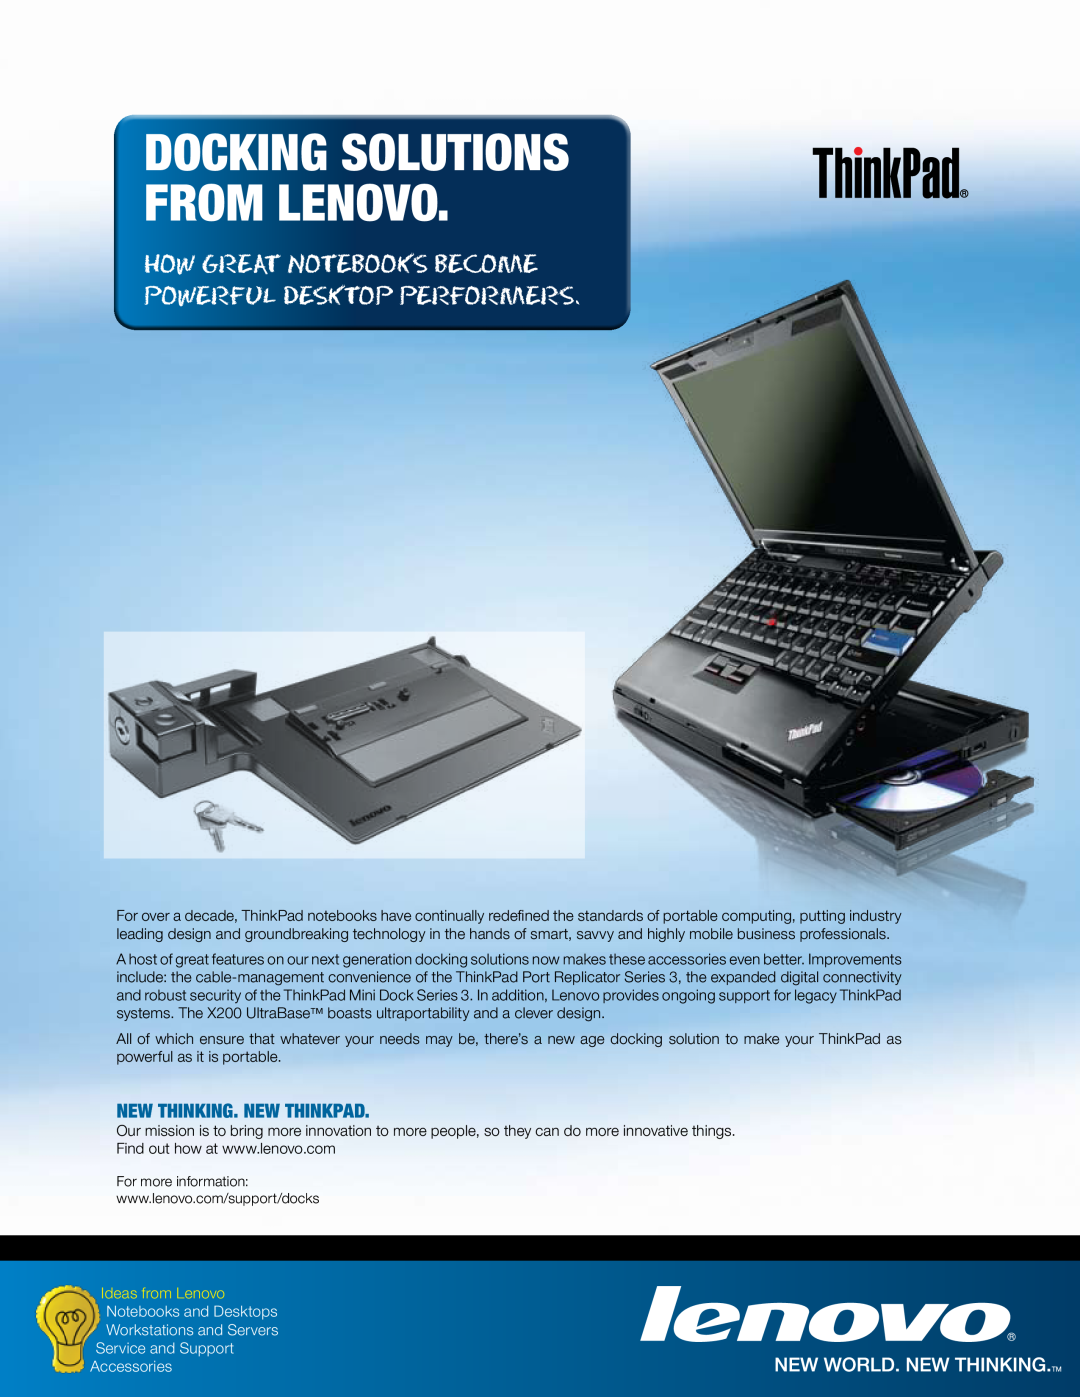 Lenovo 250410U, 250510W, 250310U New Thinking. New ThinkPad, Ideas from Lenovo, Accessories, Docking Solutions From Lenovo 